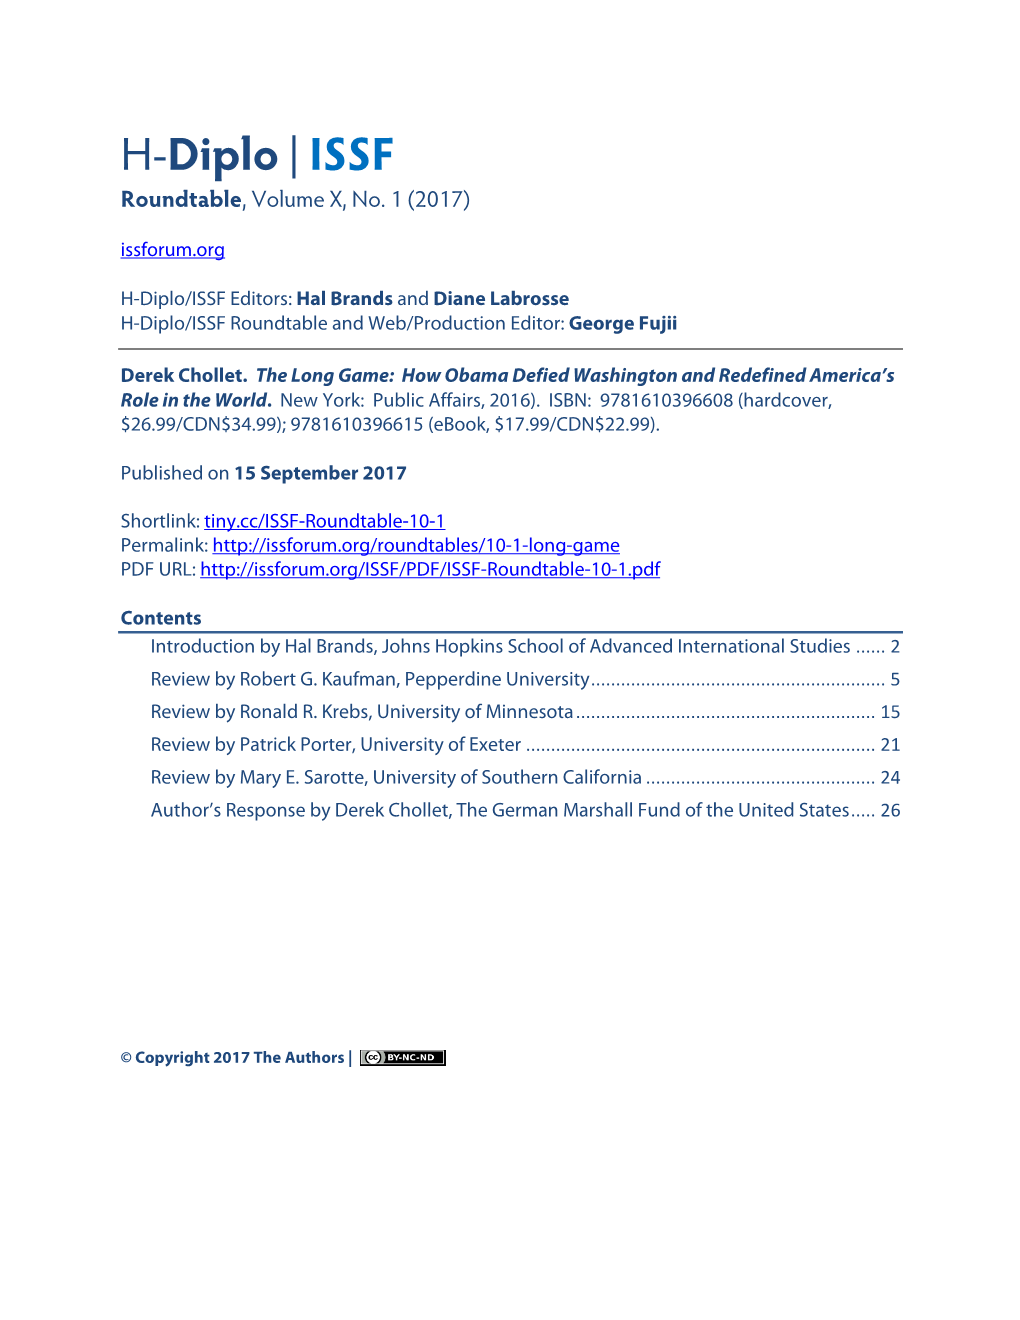 H-Diplo | ISSF Roundtable, Volume X, No